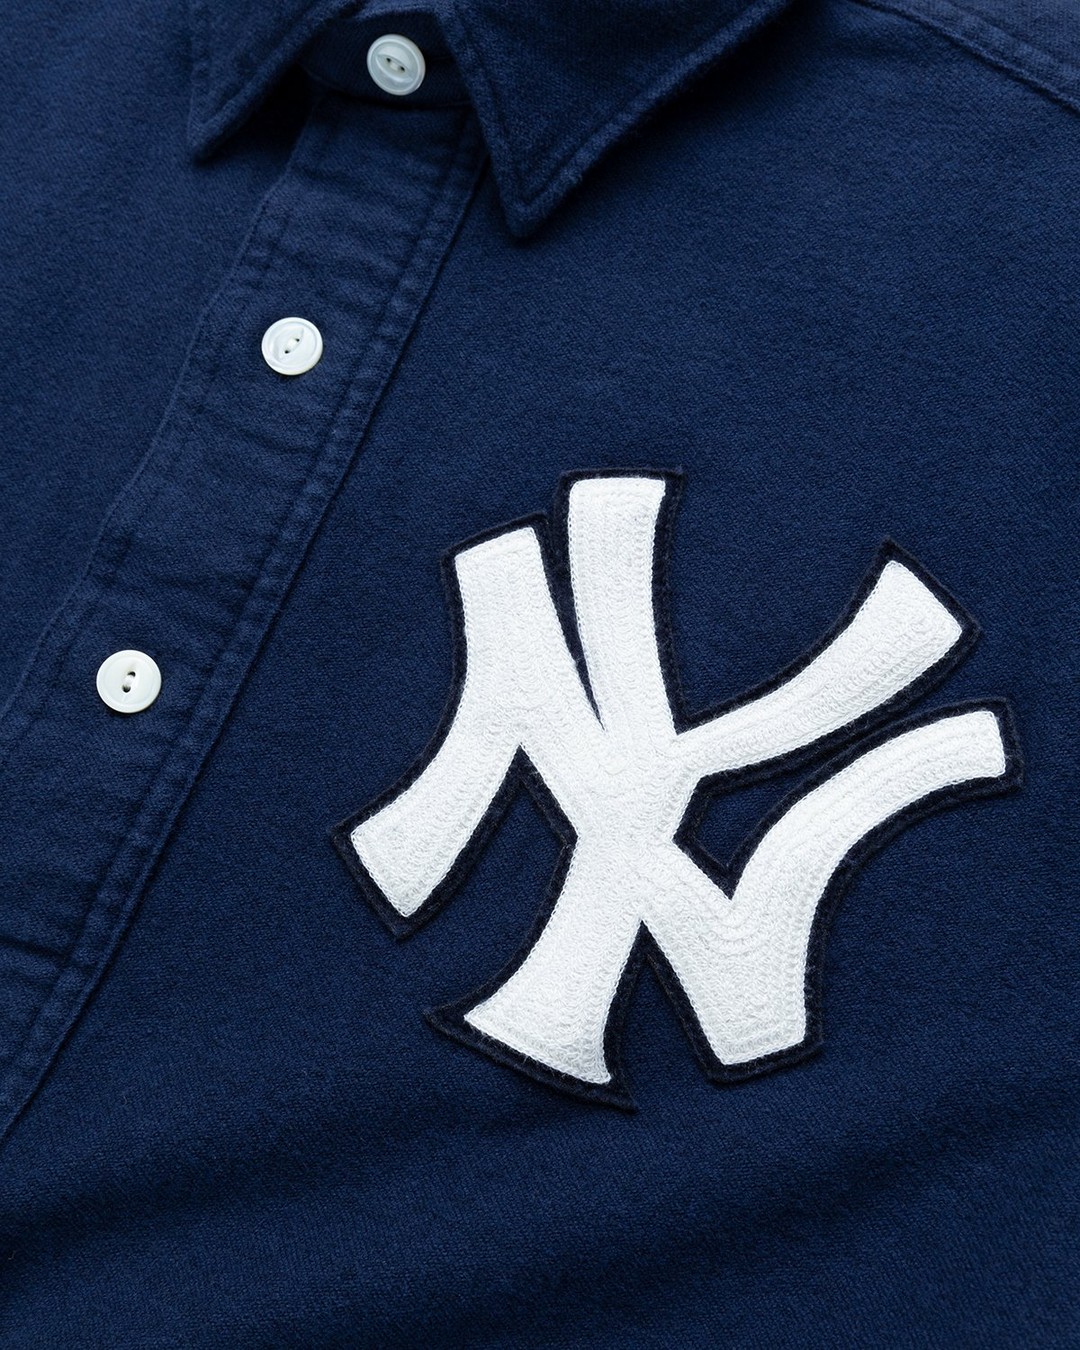 Ralph Lauren – Yankees Popover Shirt Navy - Polos - Blue - Image 6